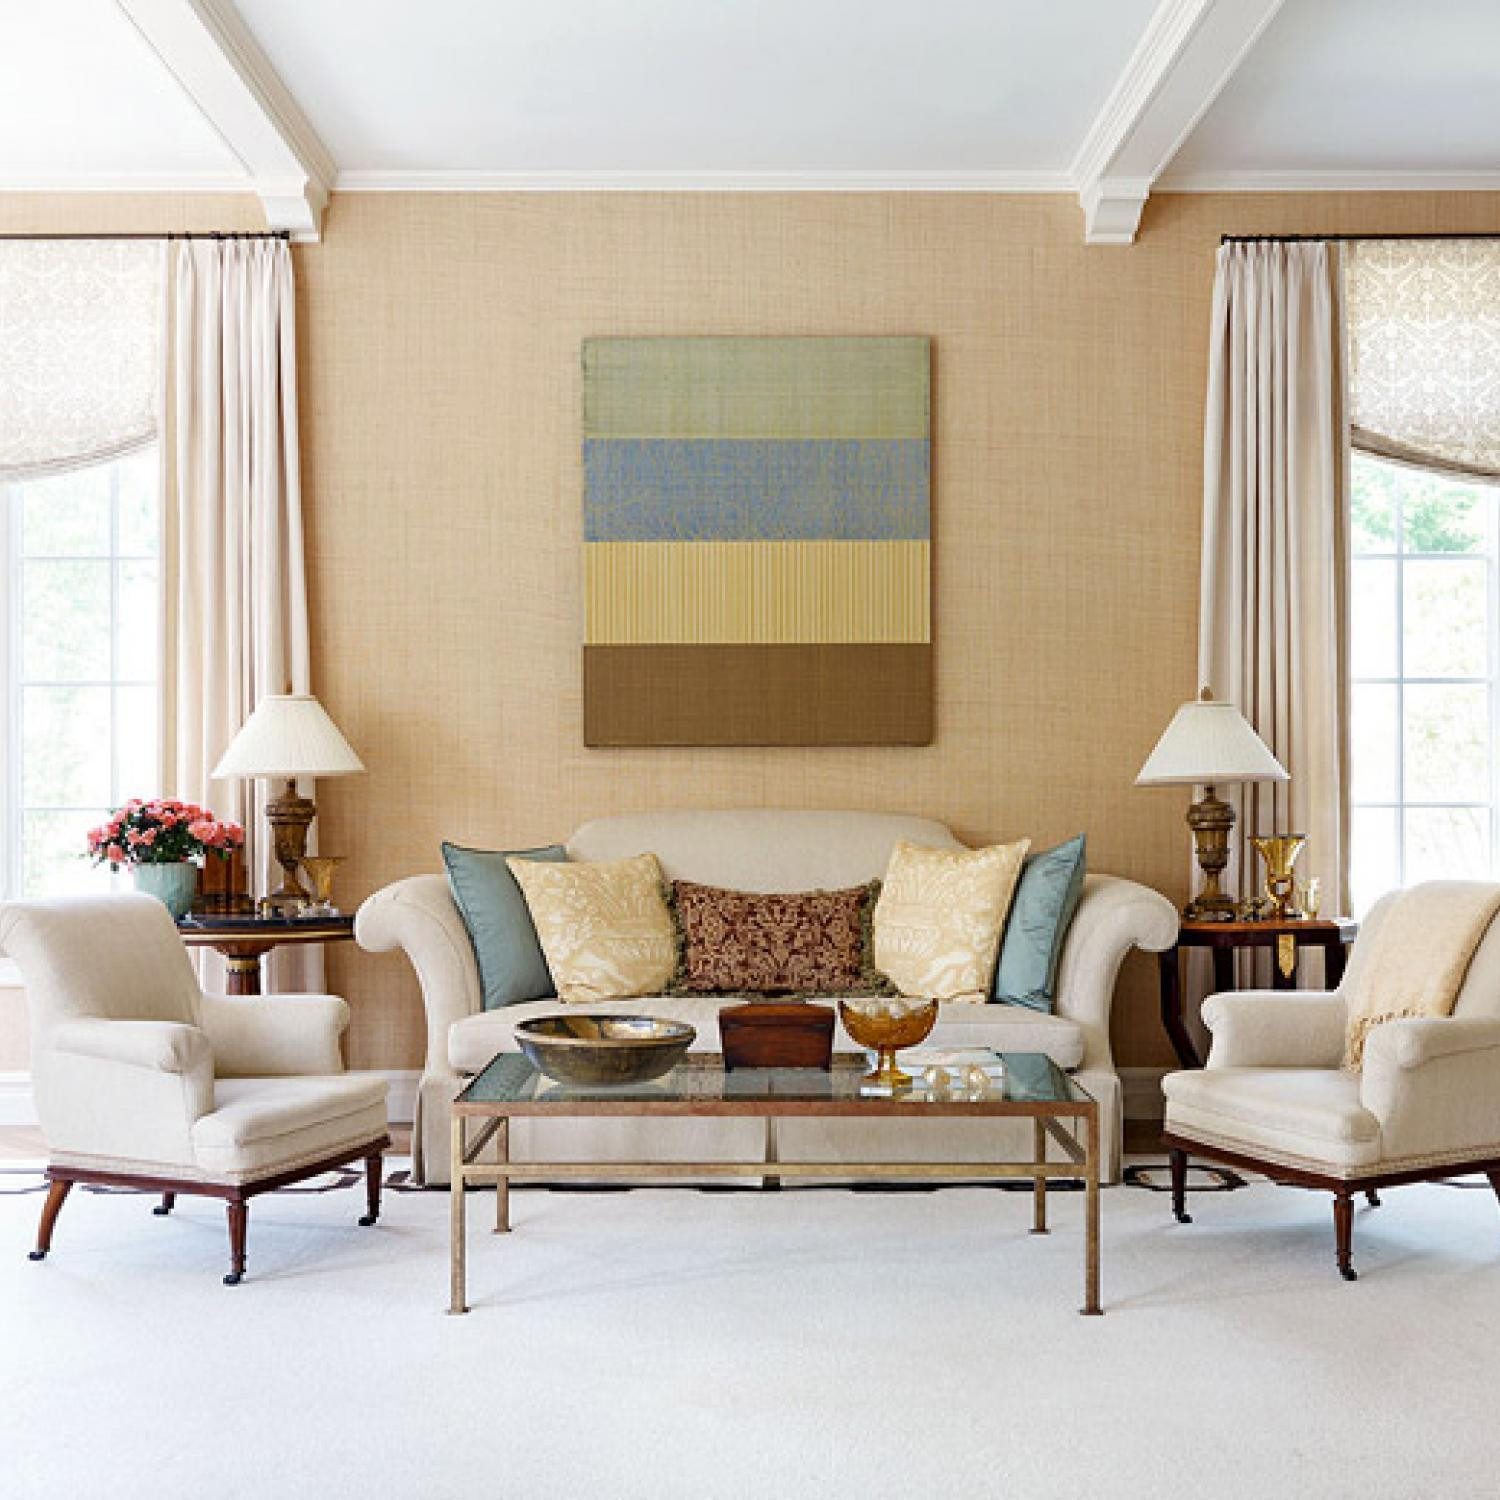 Design Ideas For Living Room
 Decorating Ideas Elegant Living Rooms